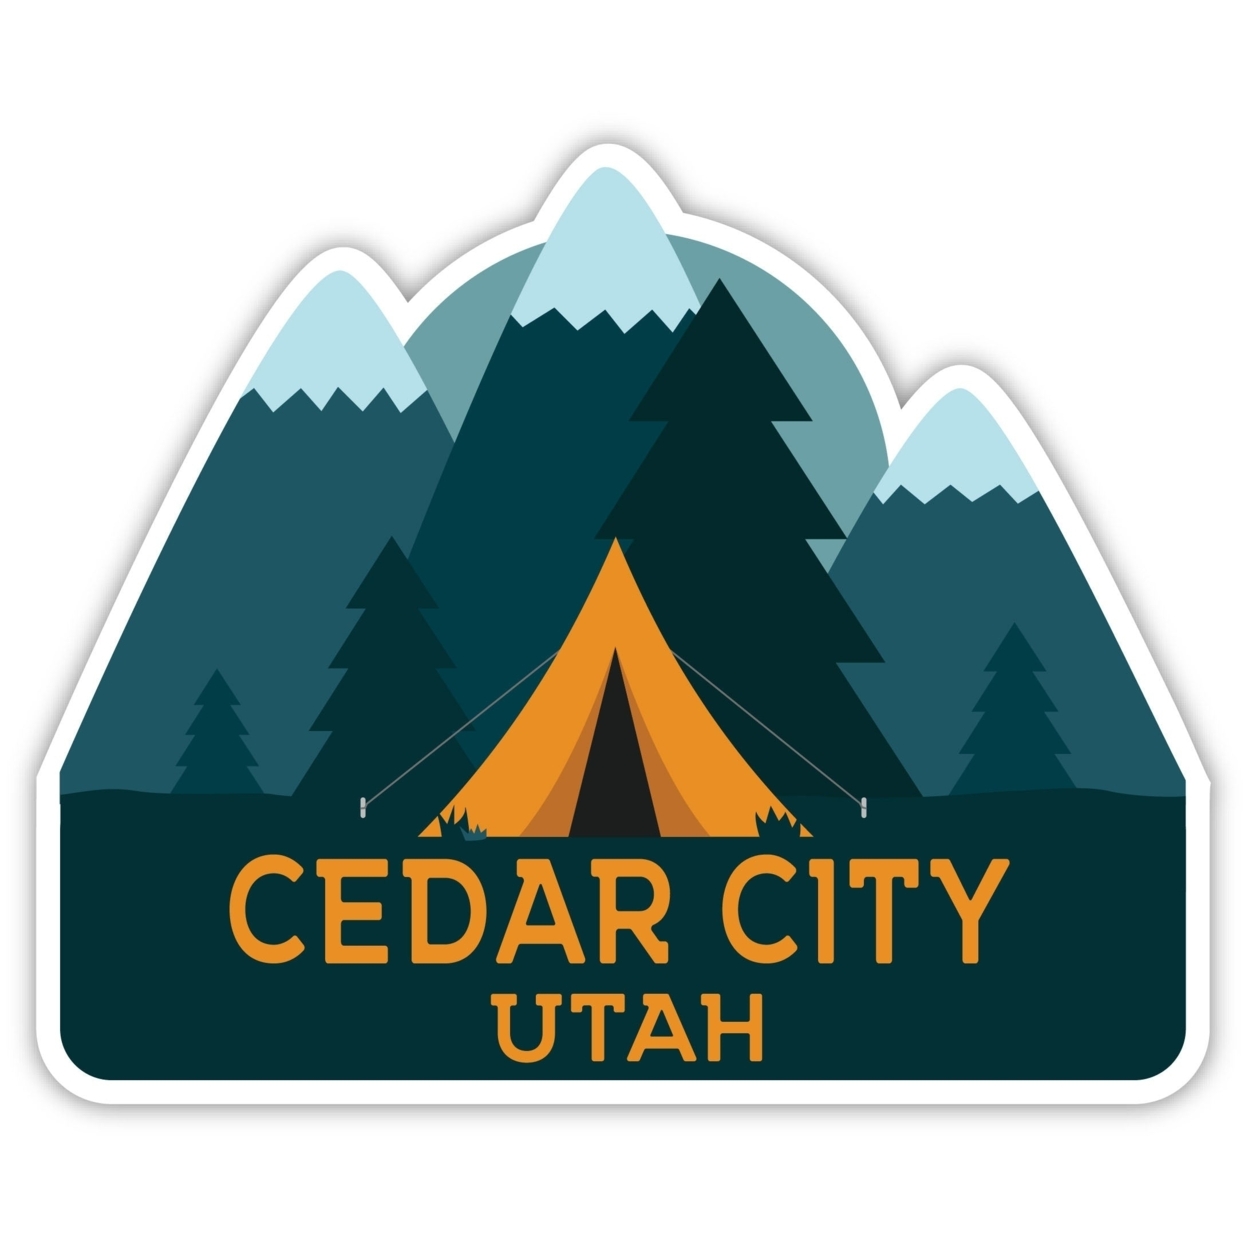 Cedar City Utah Souvenir Decorative Stickers (Choose Theme And Size) - Single Unit, 4-Inch, Adventures Awaits